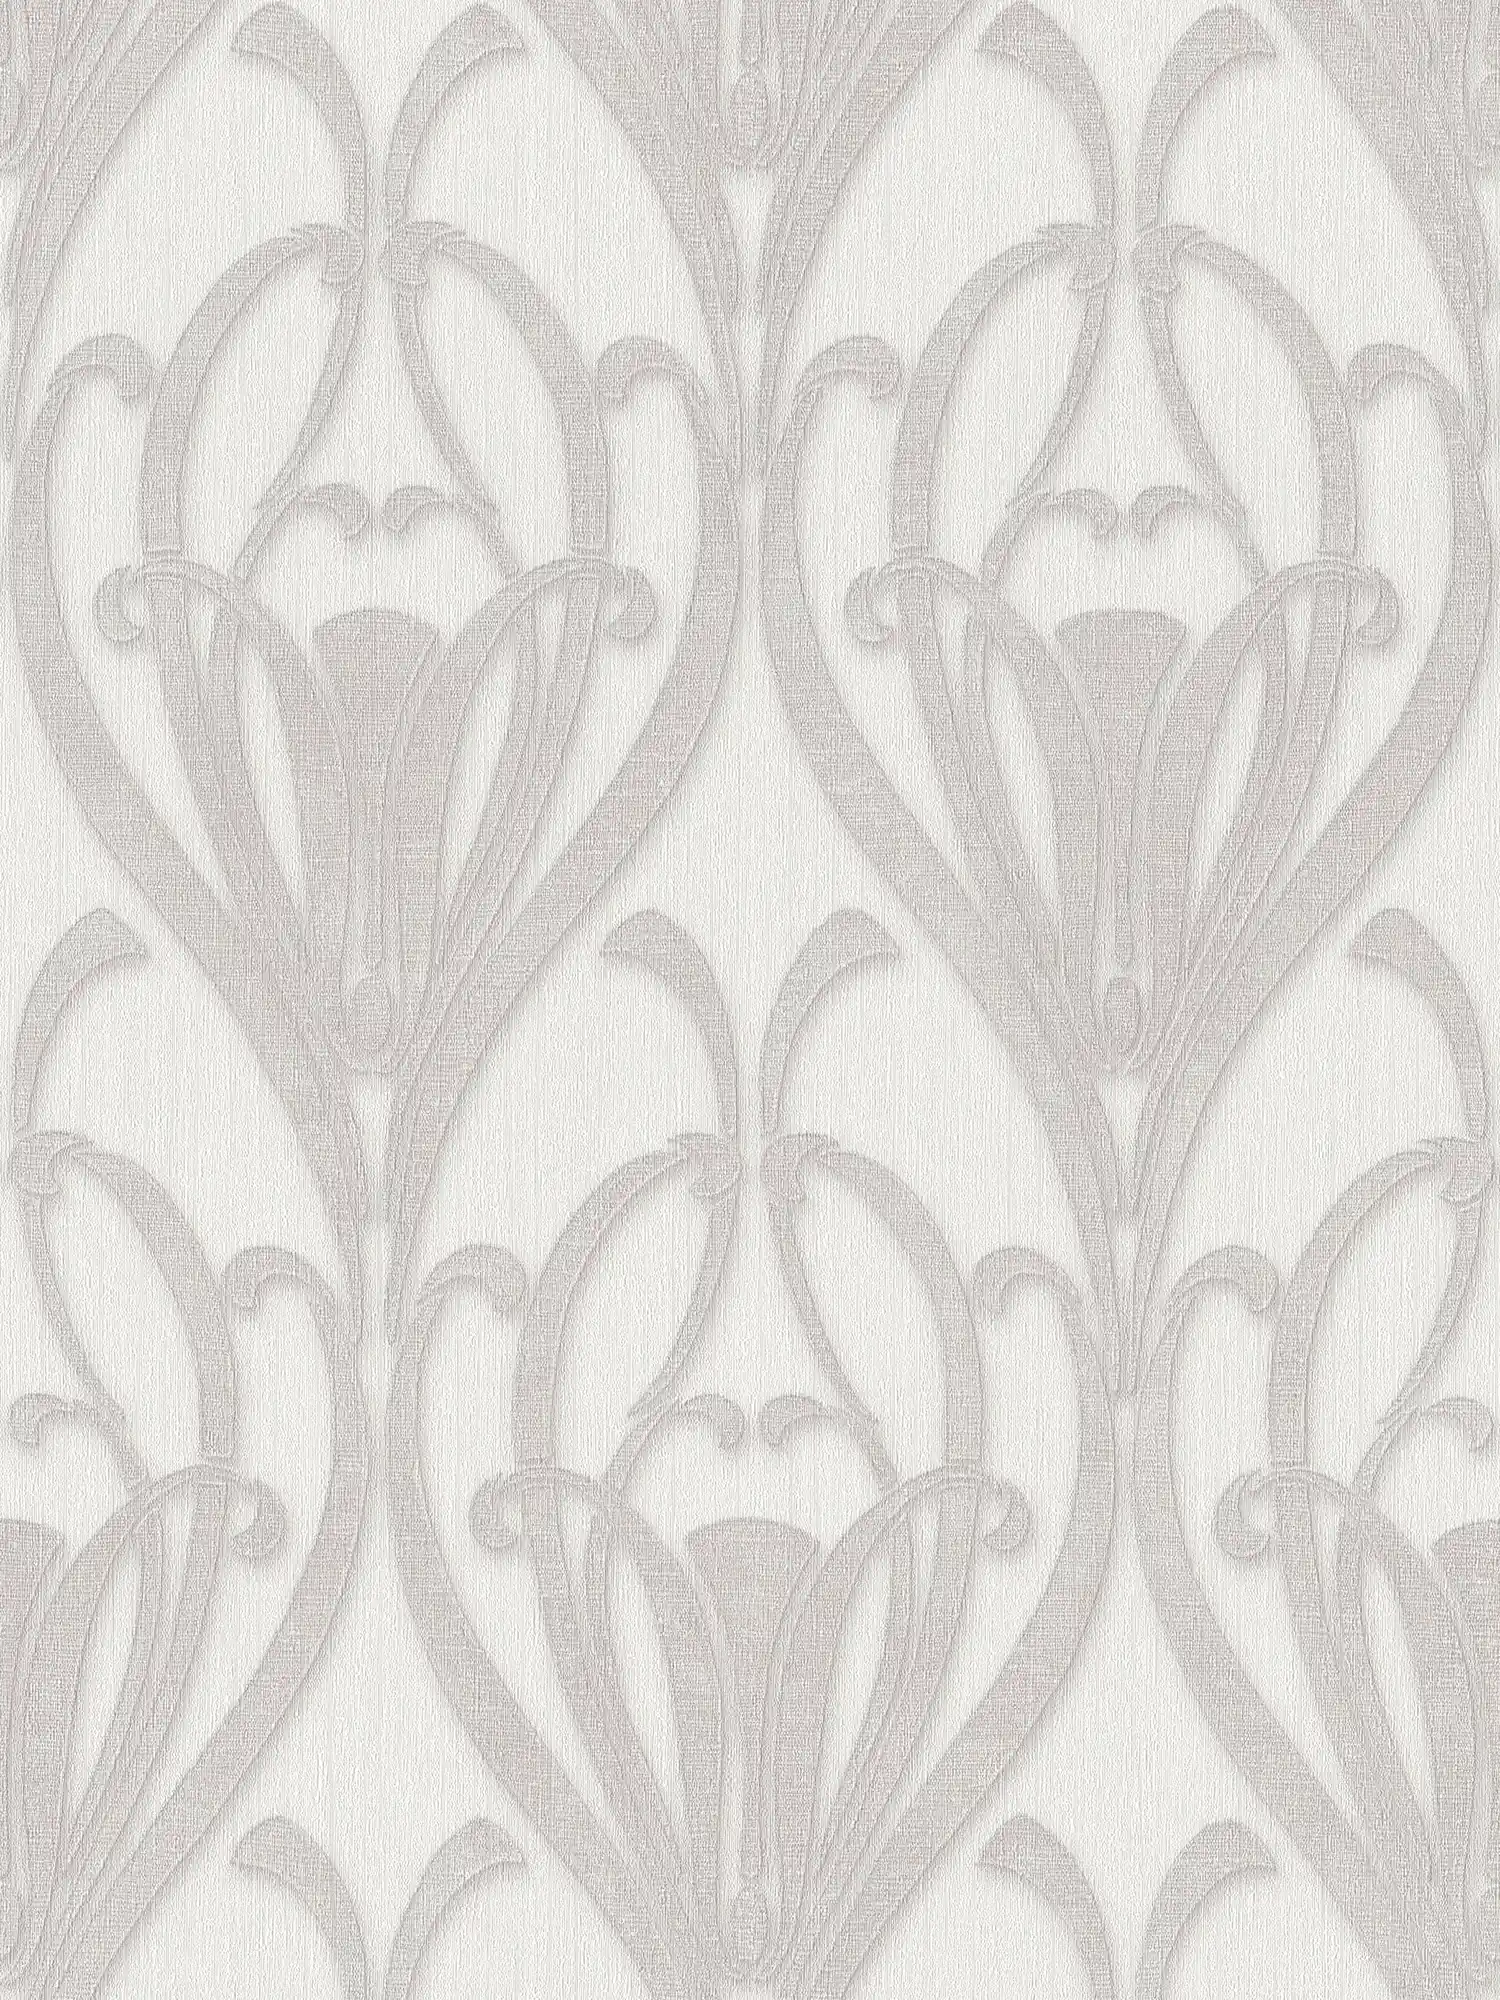 Ornament wallpaper with art deco pattern & textile texture
